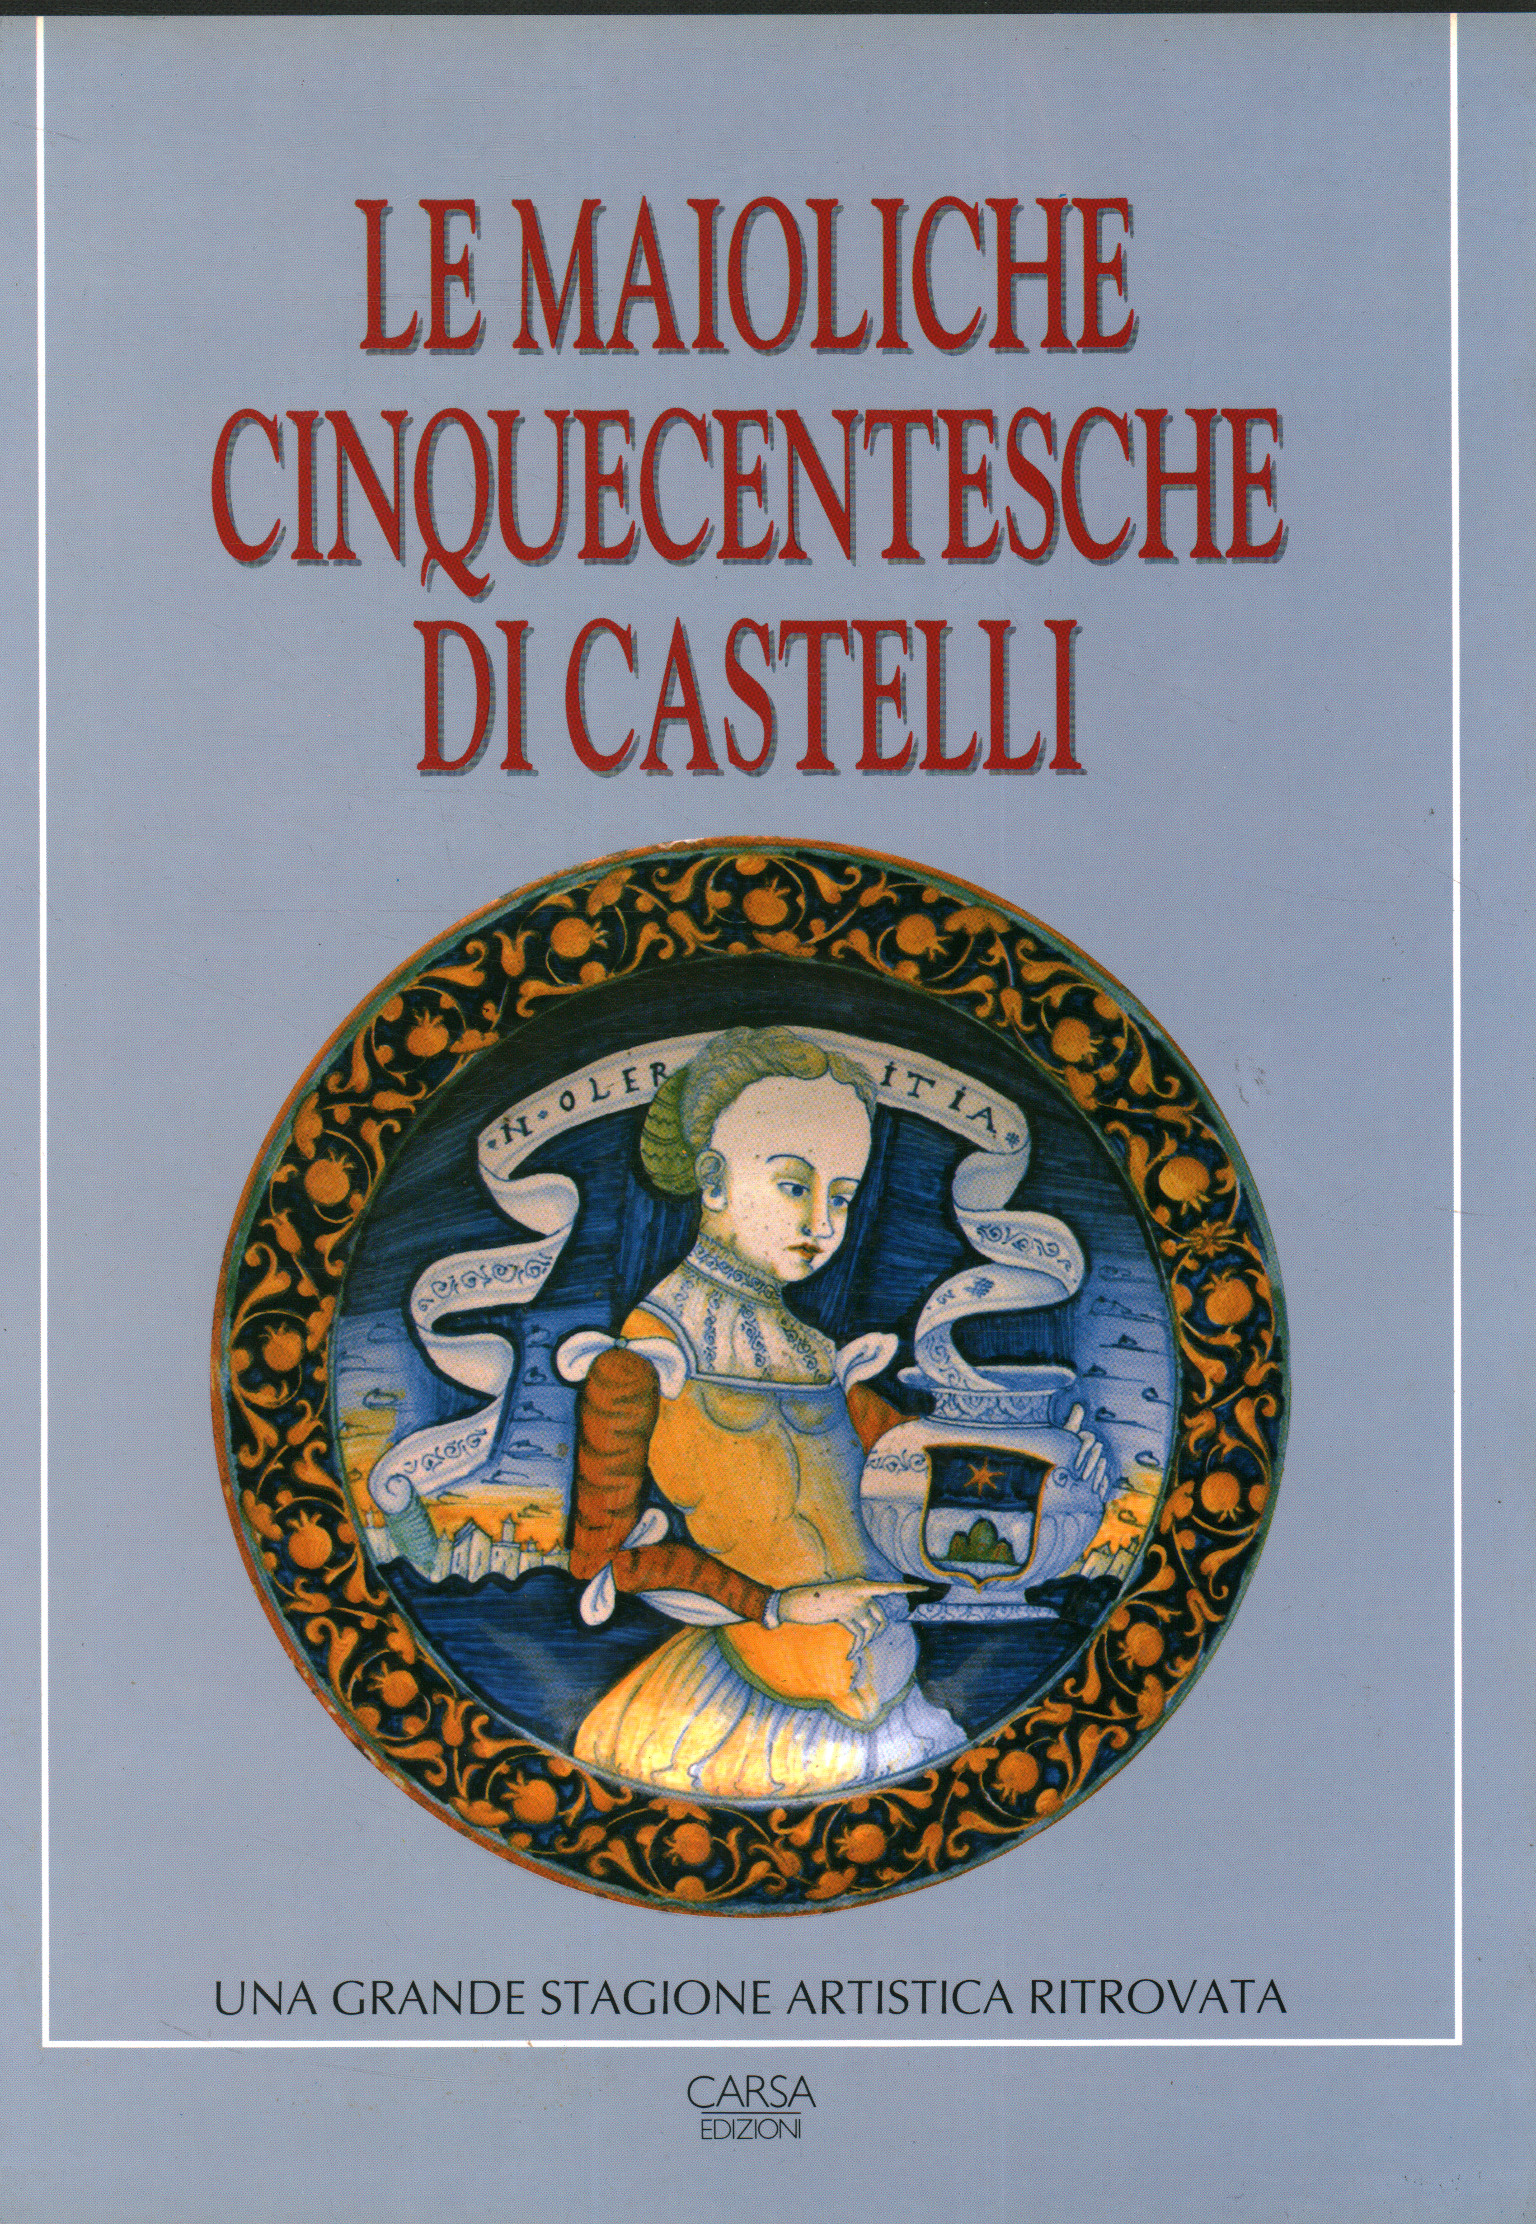 The sixteenth-century majolica of Castelli